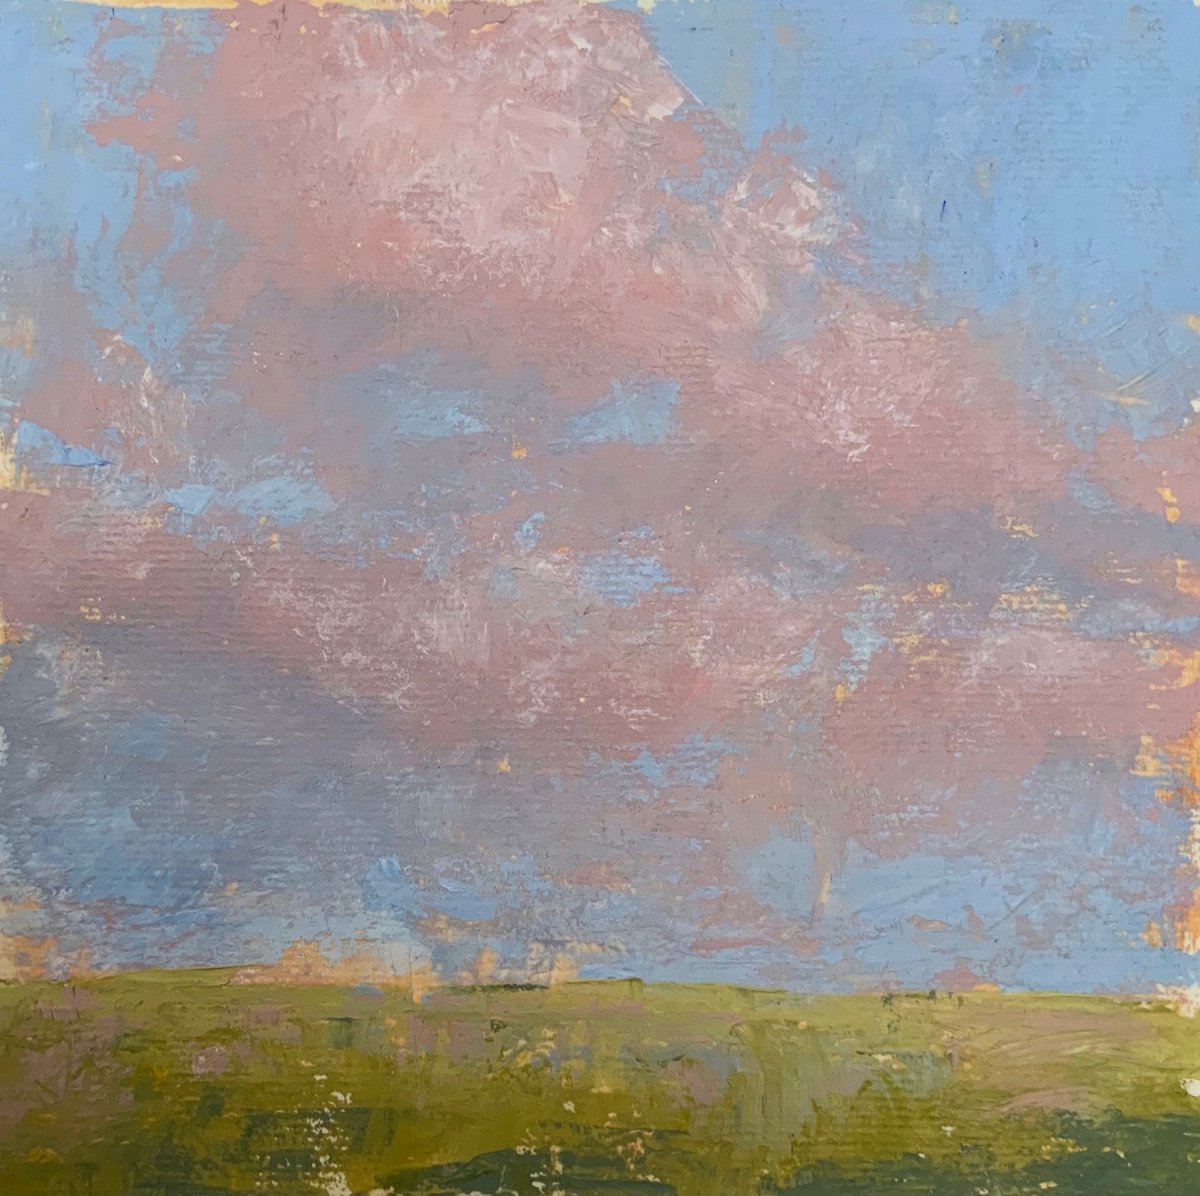 Cloudscape vii by Jessica Davidson